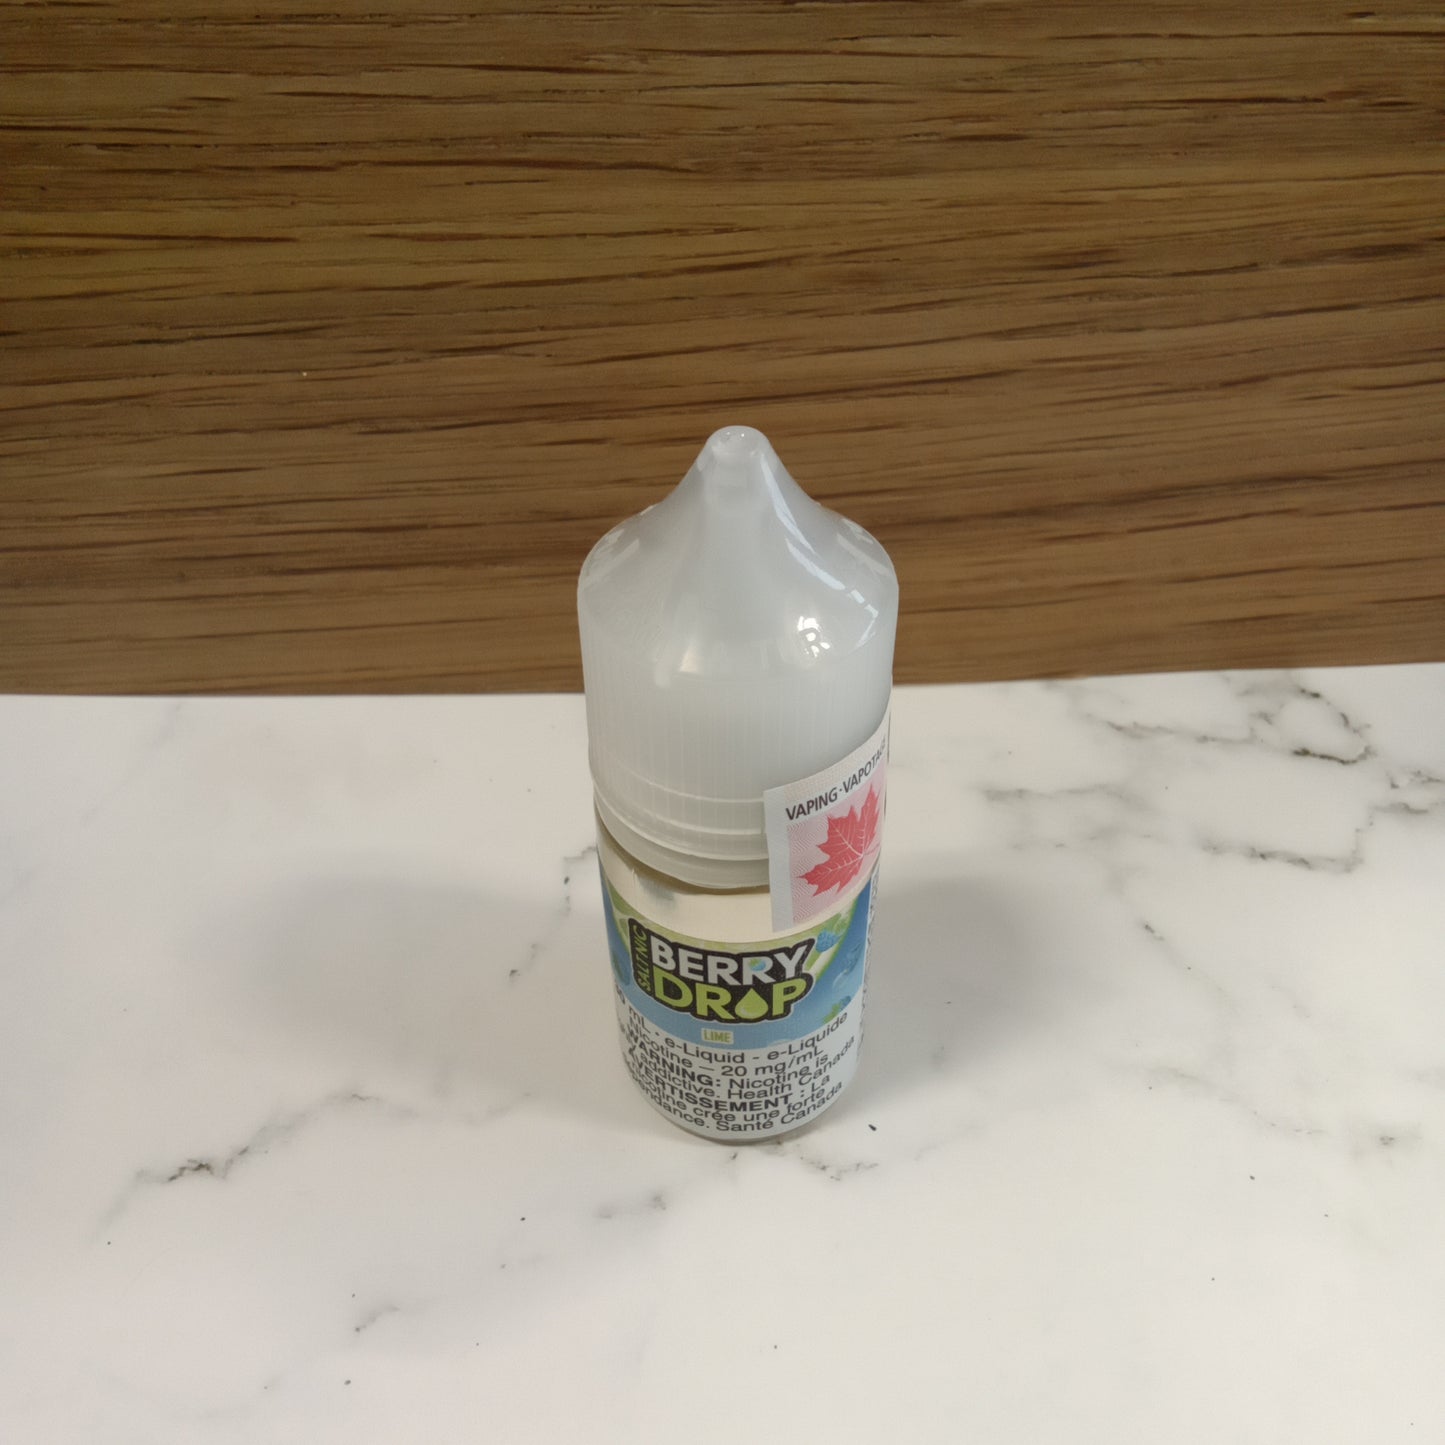 Berry drop non-iced 30 ml 20nic